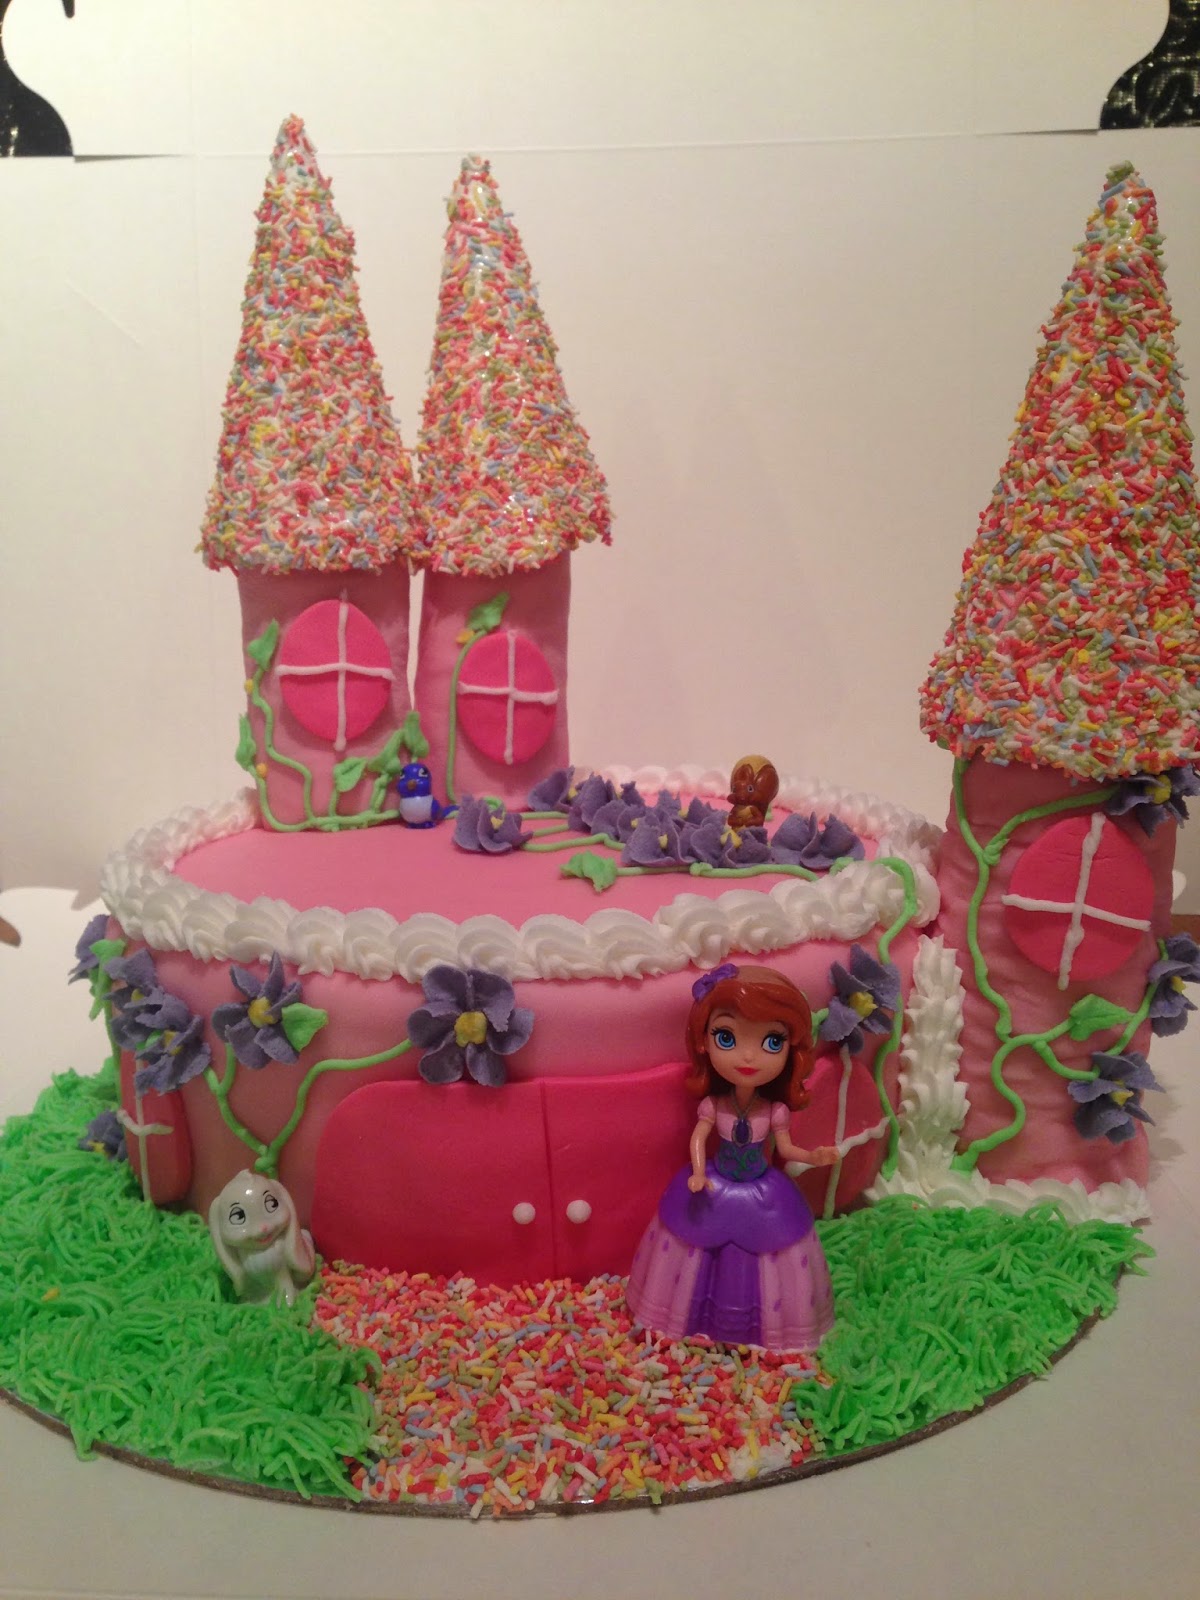 http://weekend-mummy.blogspot.com.au/2014/07/the-perfect-cake-for-little-princess.html